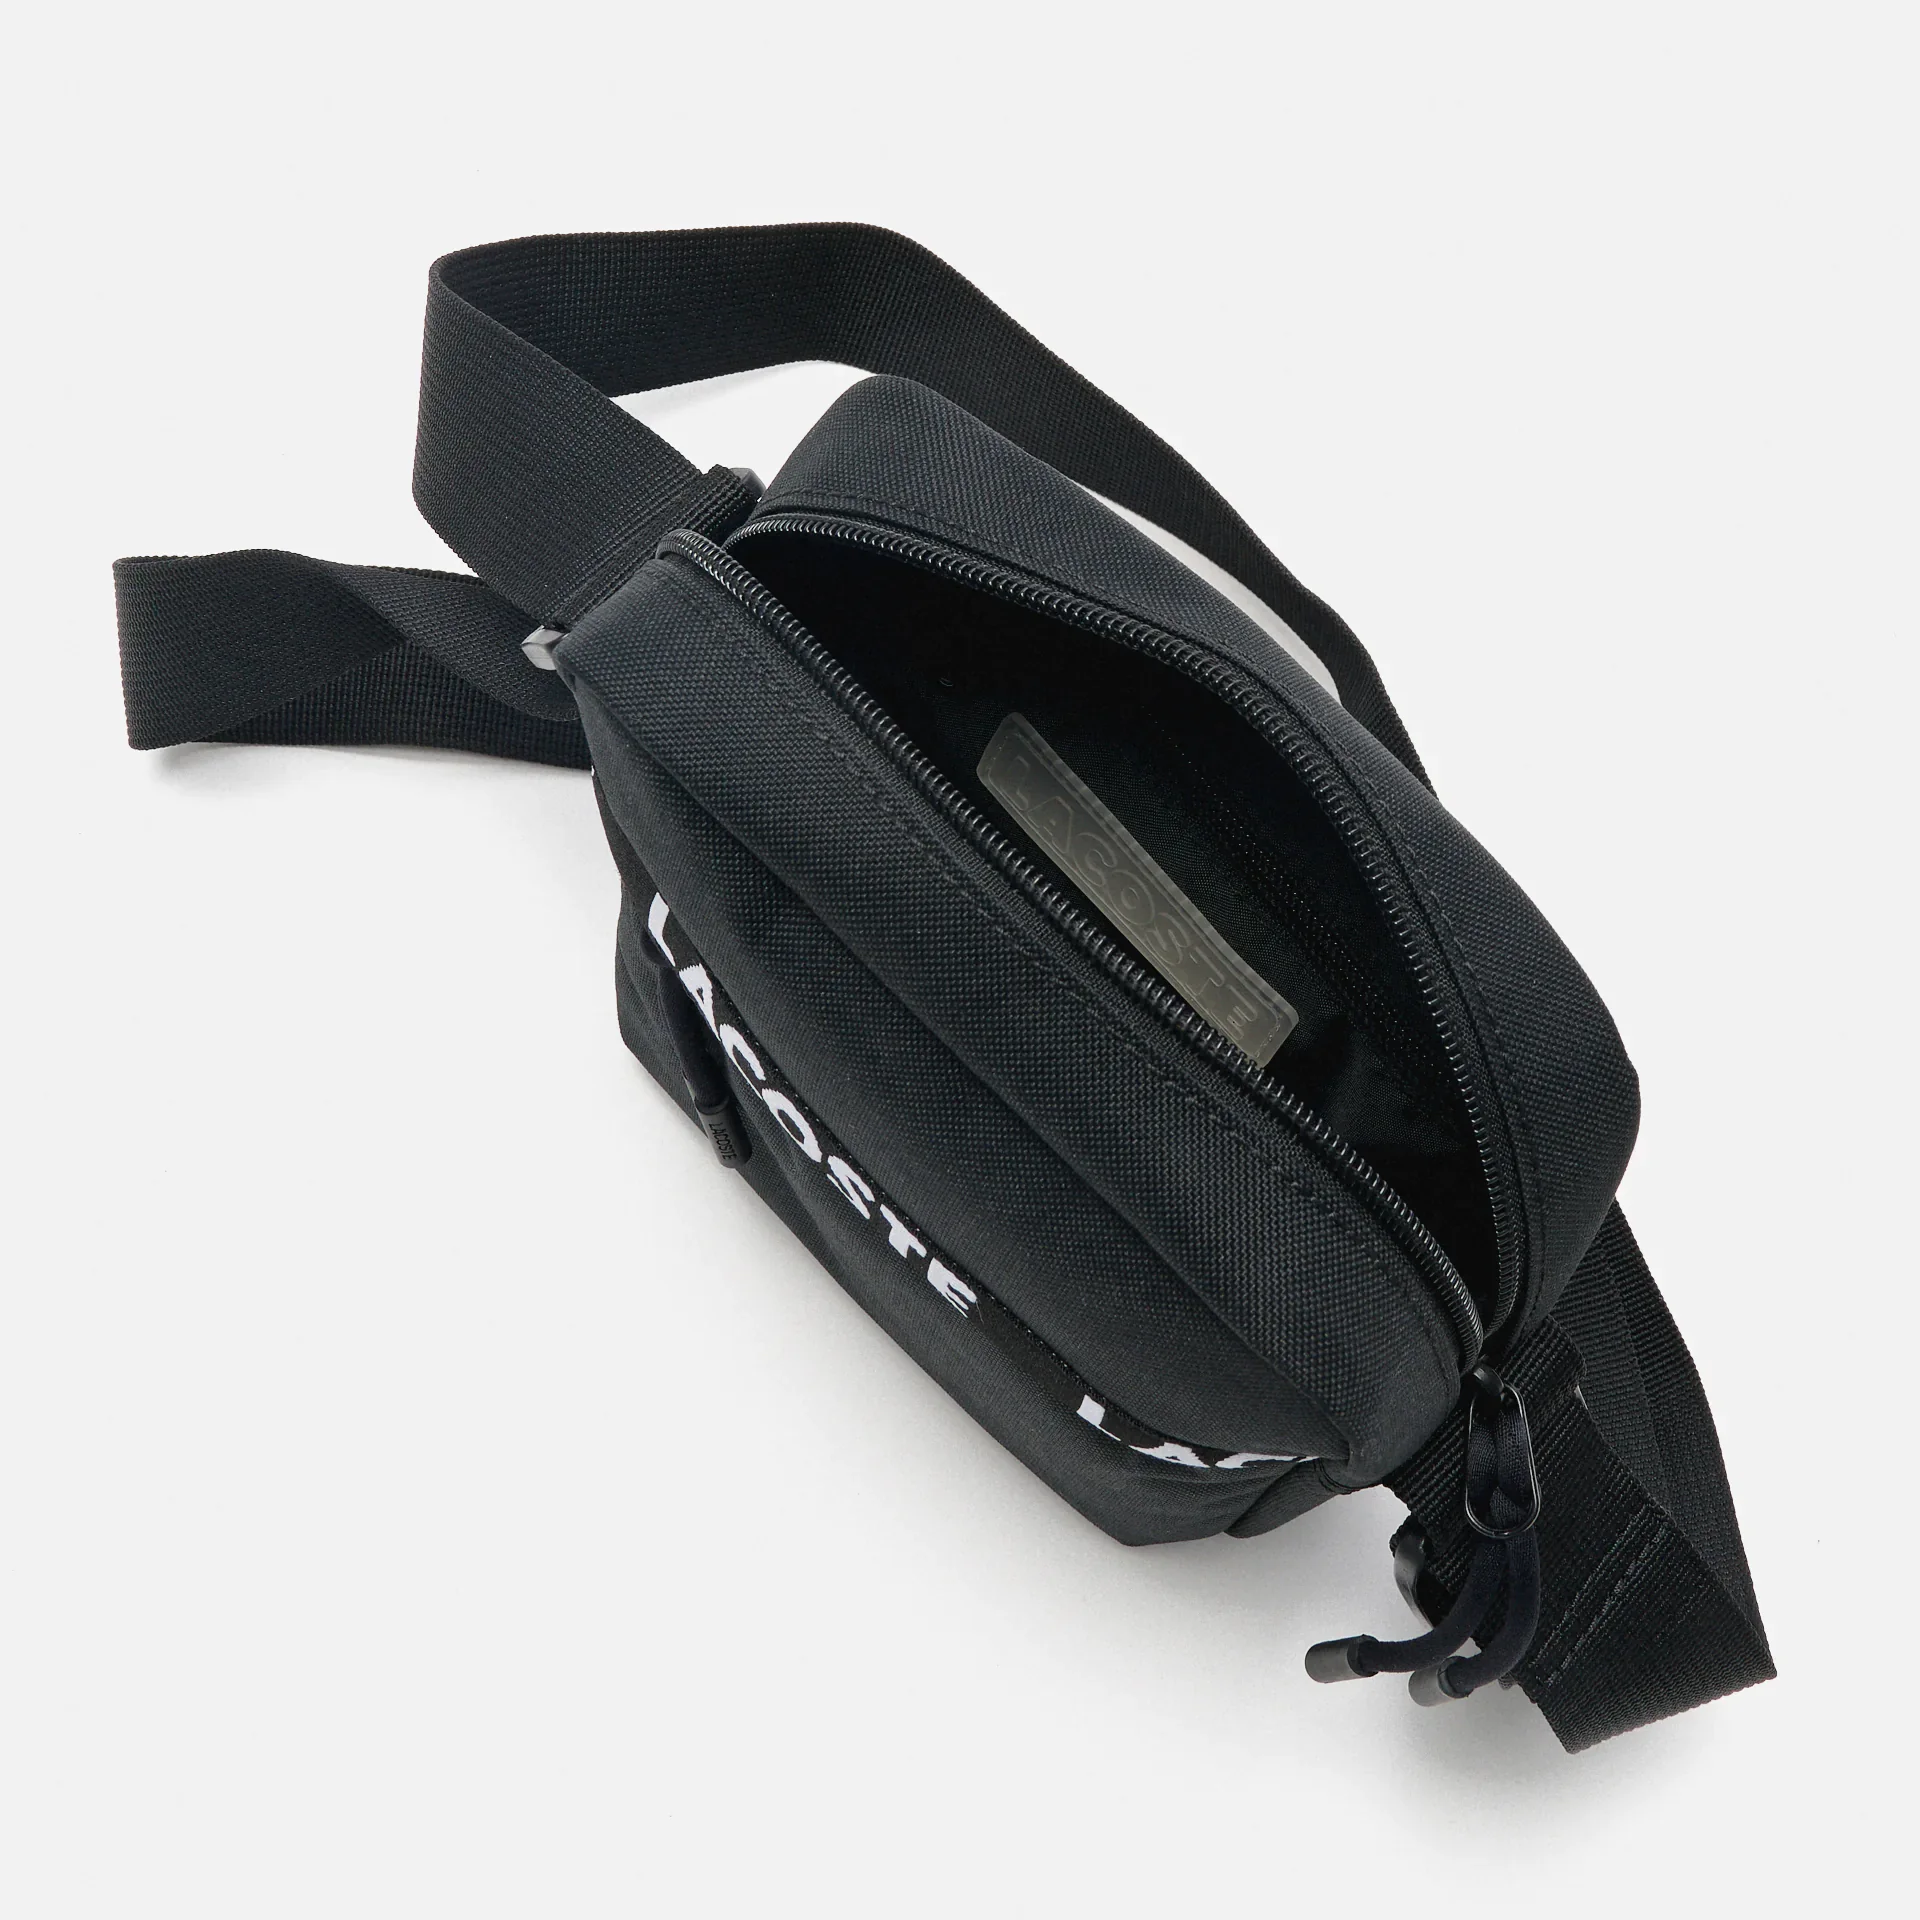  Lacoste Vertical Camera Bag Tape Noir